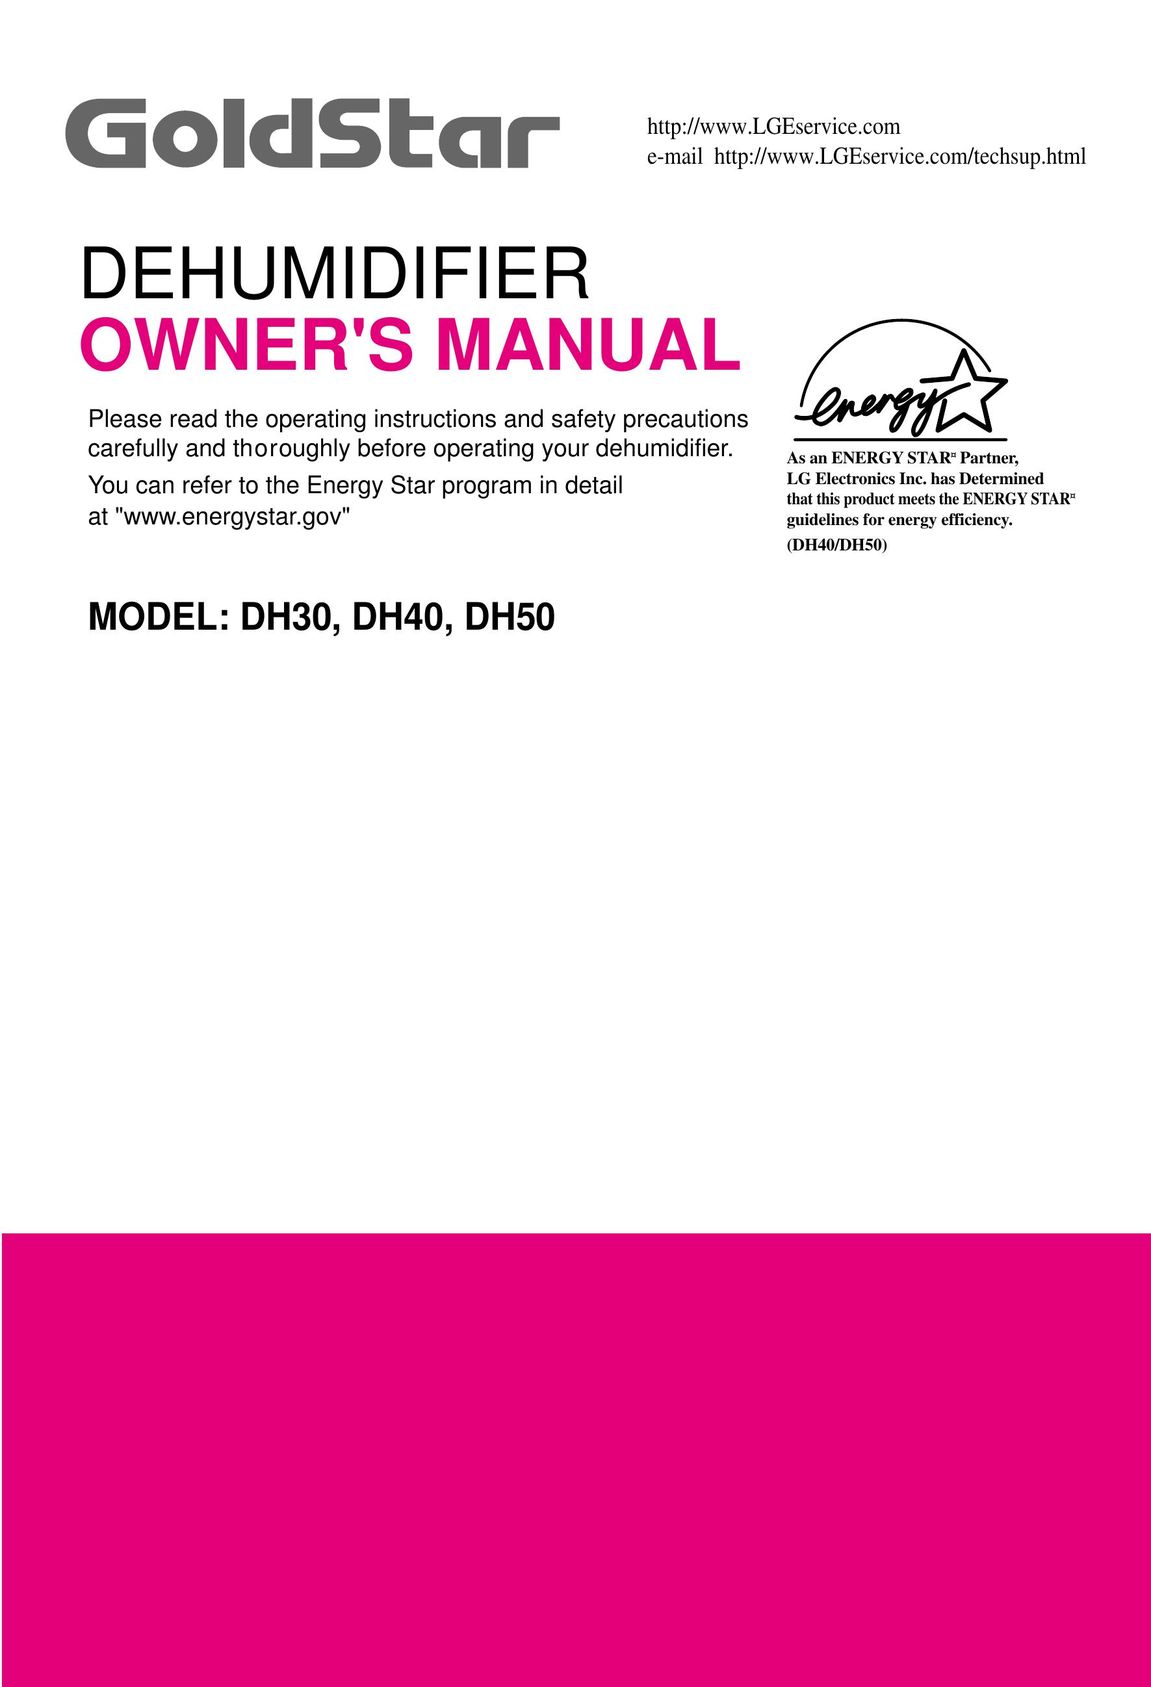 Goldstar DH40 Dehumidifier User Manual